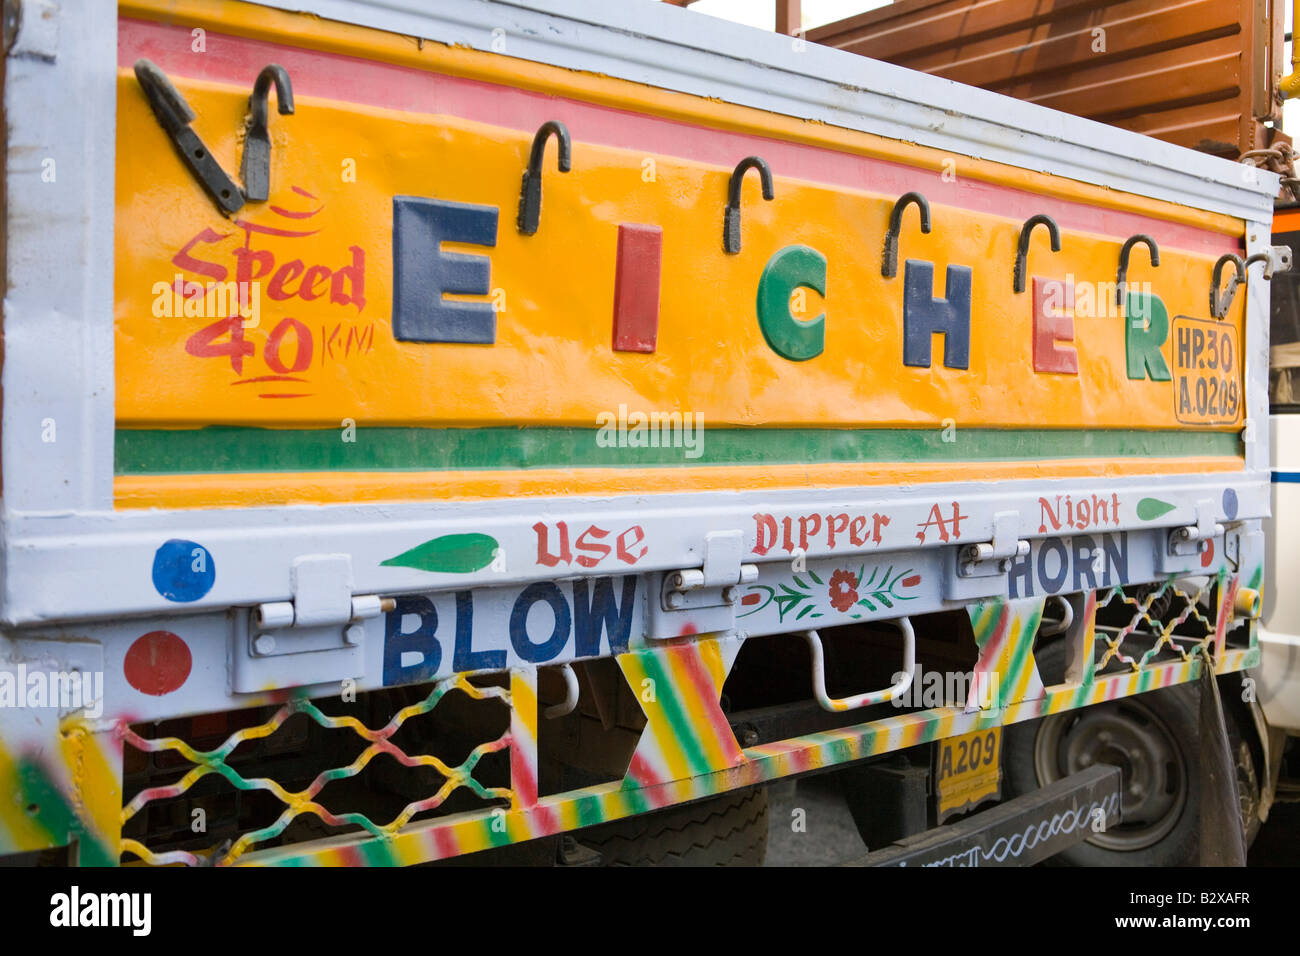 Detail of elaborately decorated trucks/lorries in India, Hindu religion. Stock Photo